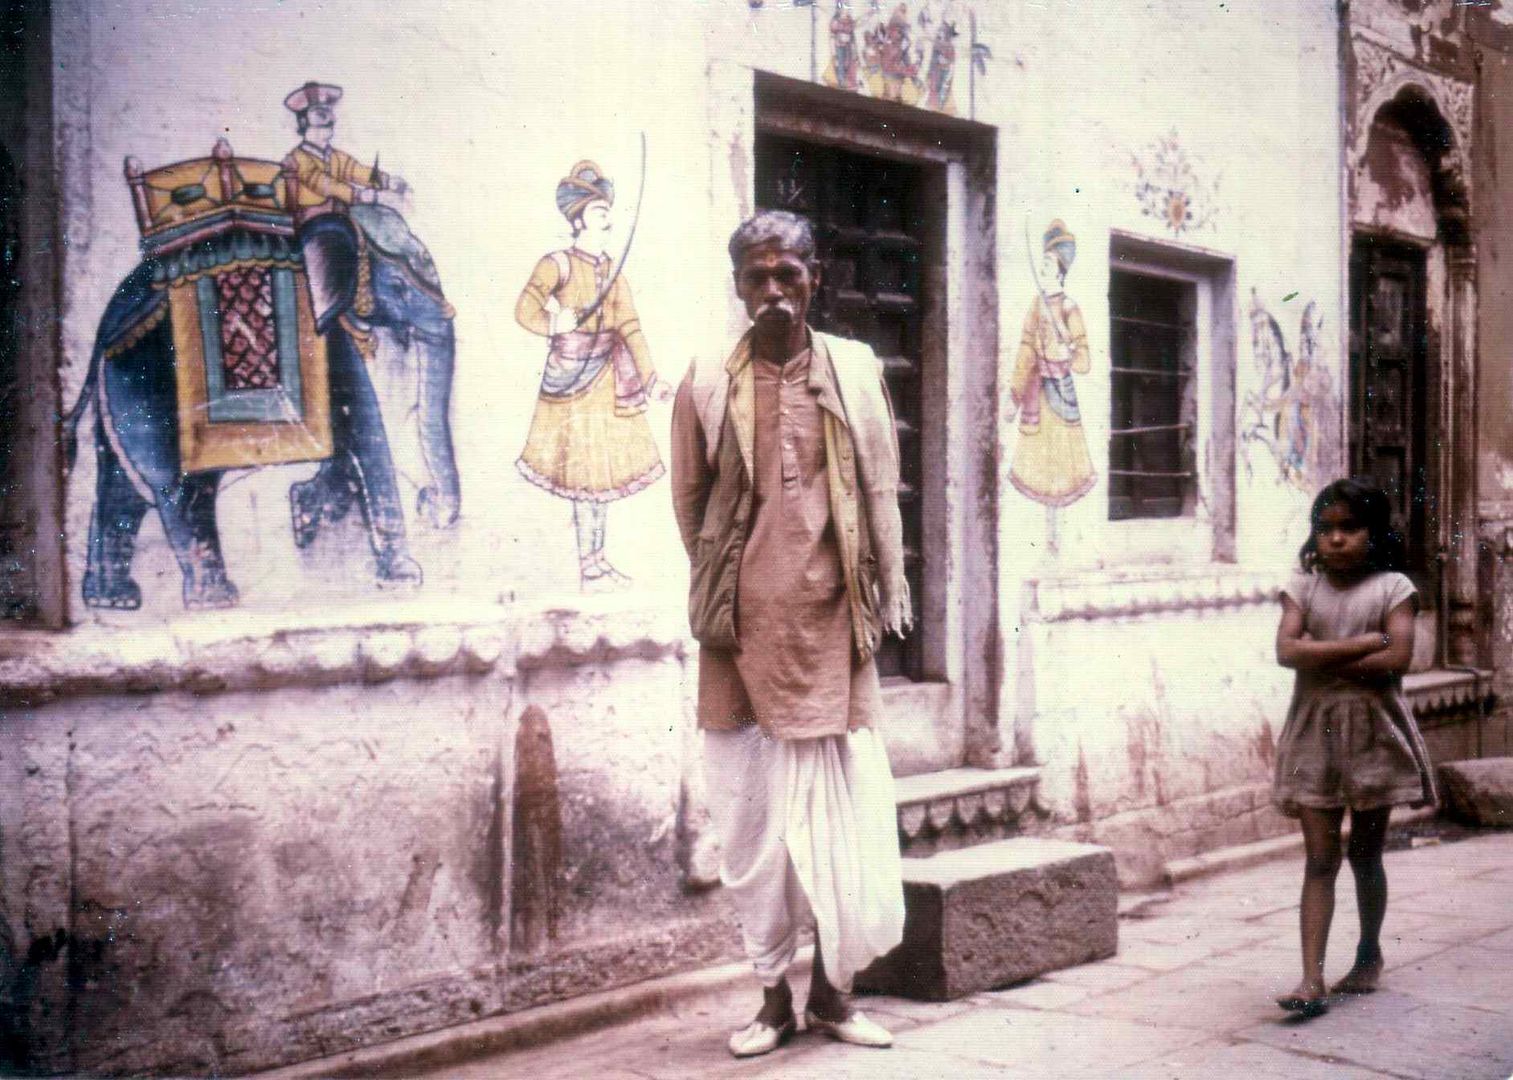 Wall_paintings_Varanasi_1973_zpsc7ddc47b.jpg